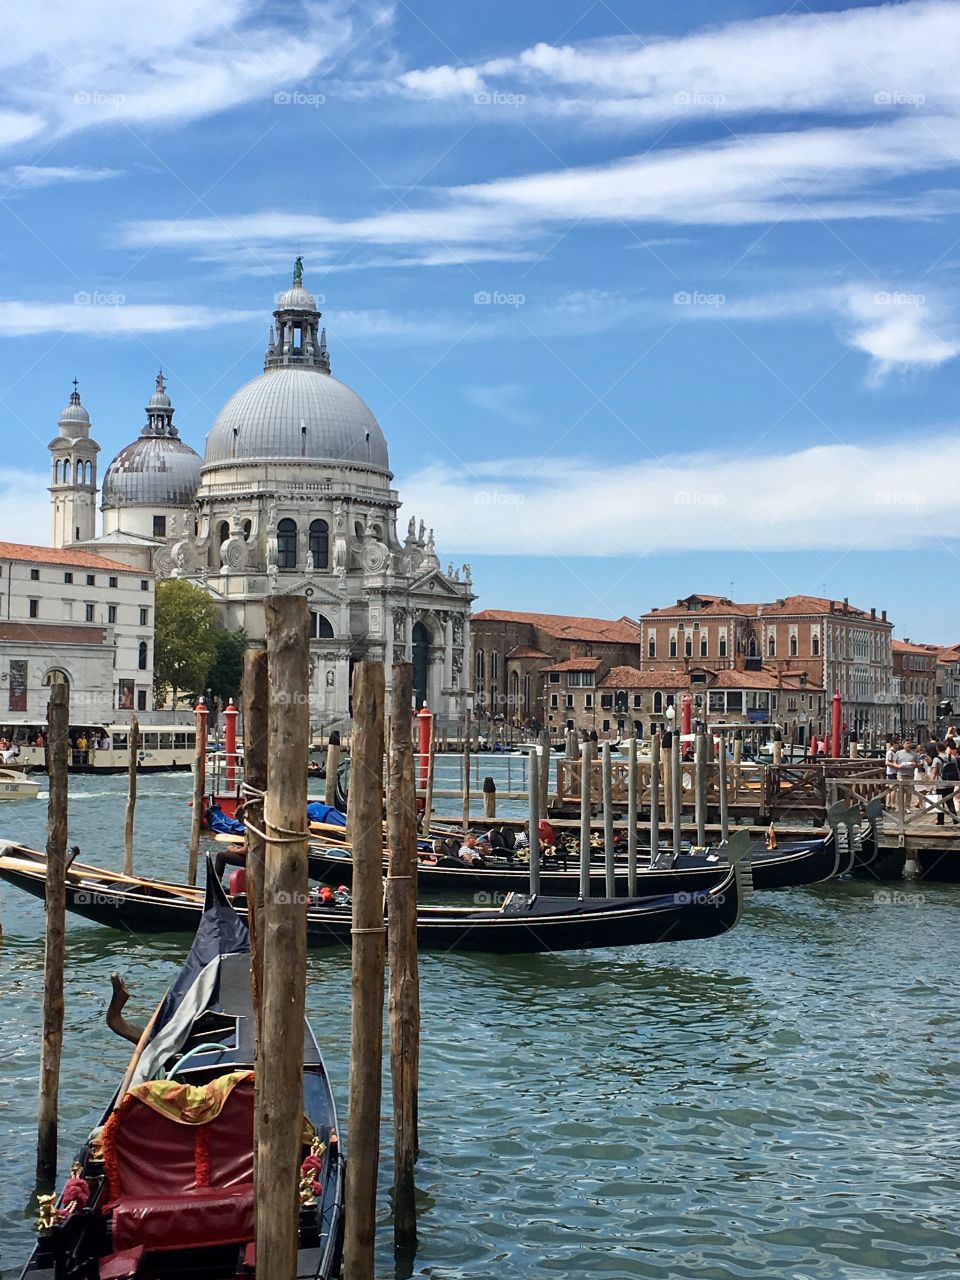 Venice's gondola stands